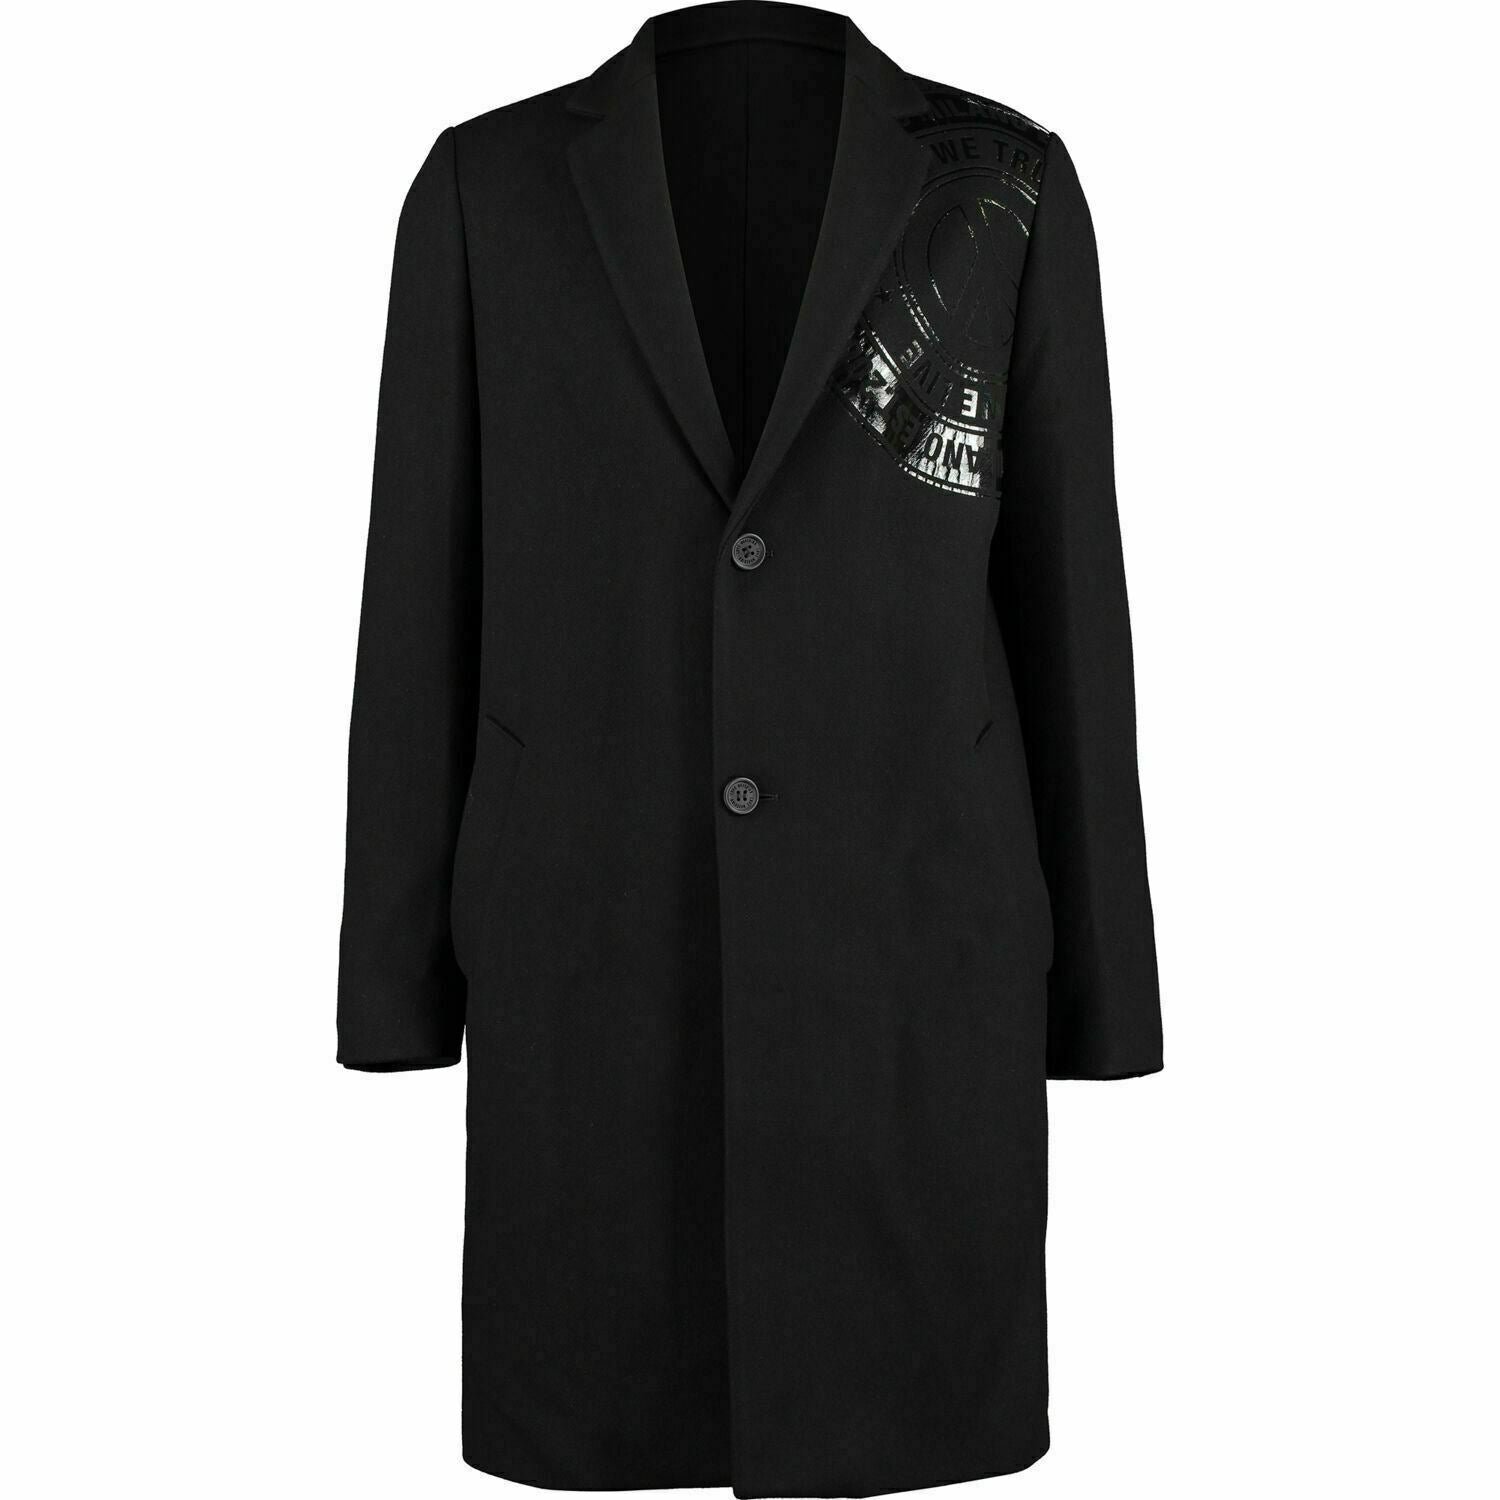 LOVE MOSCHINO Men's Black Wool Blend Coat, 80% Wool, Printed Shoulder, size 40